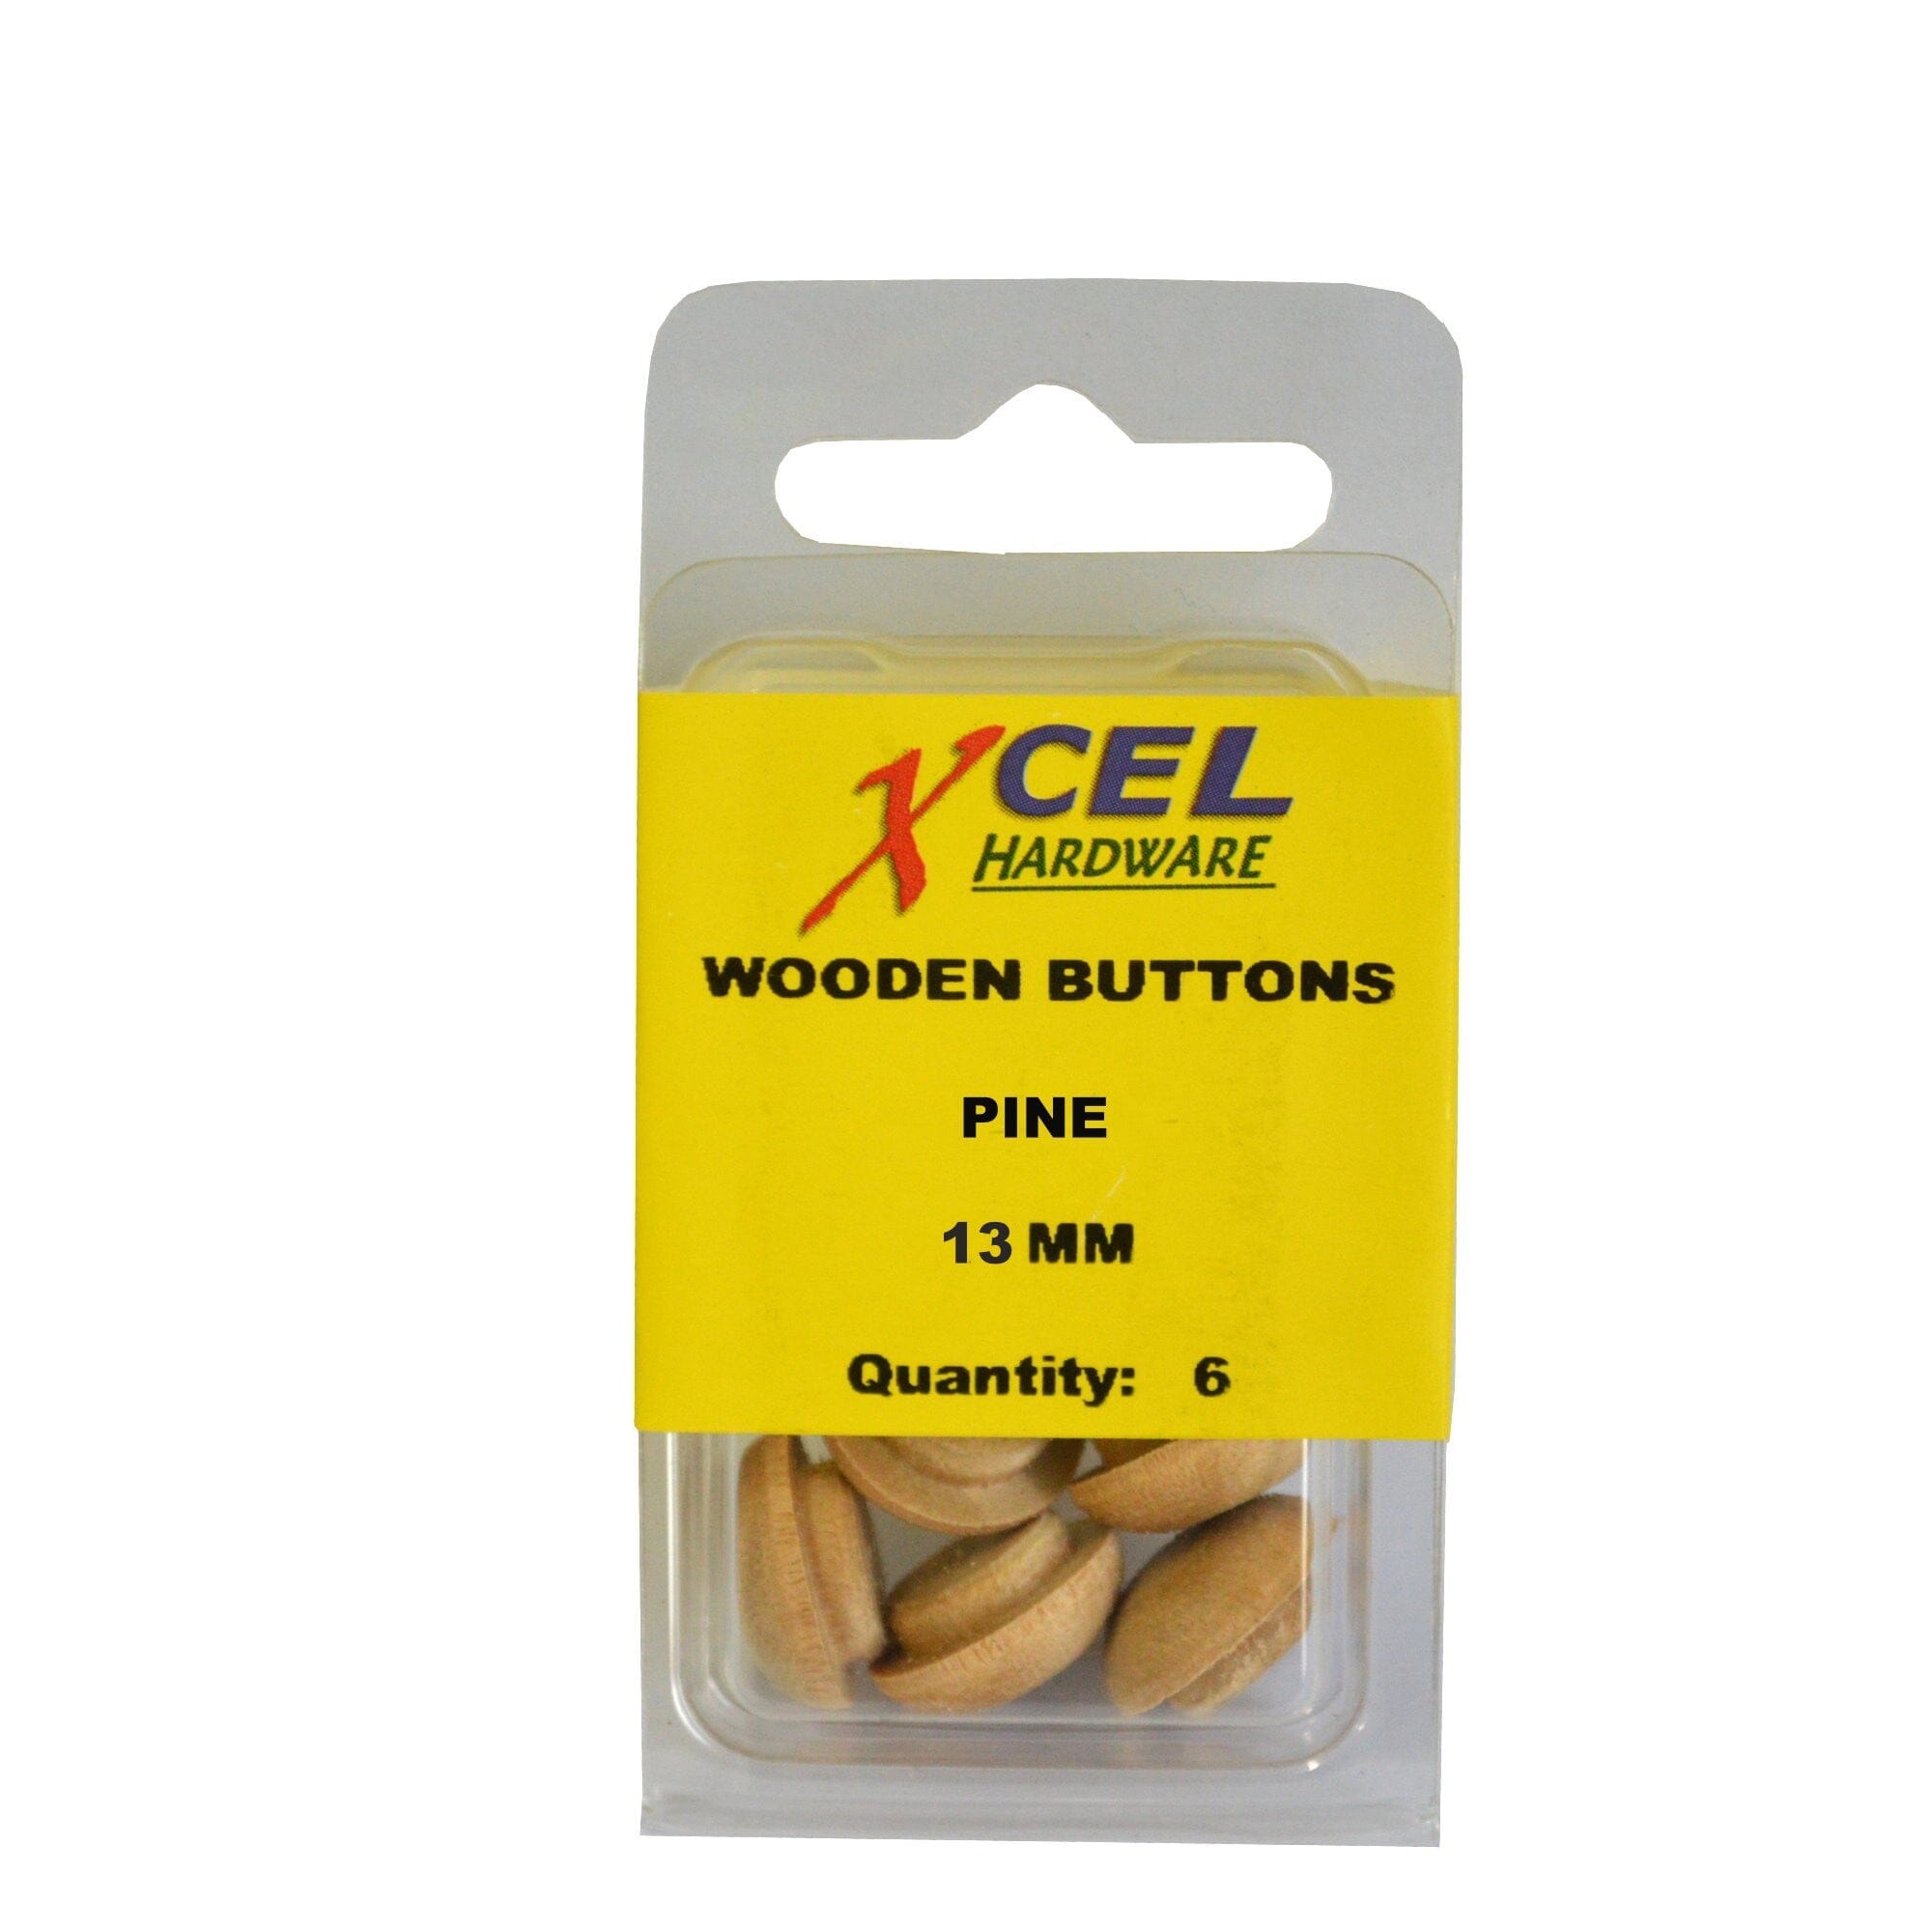 Xcel Wooden Pin Buttons - Pine 6-pce 13mm